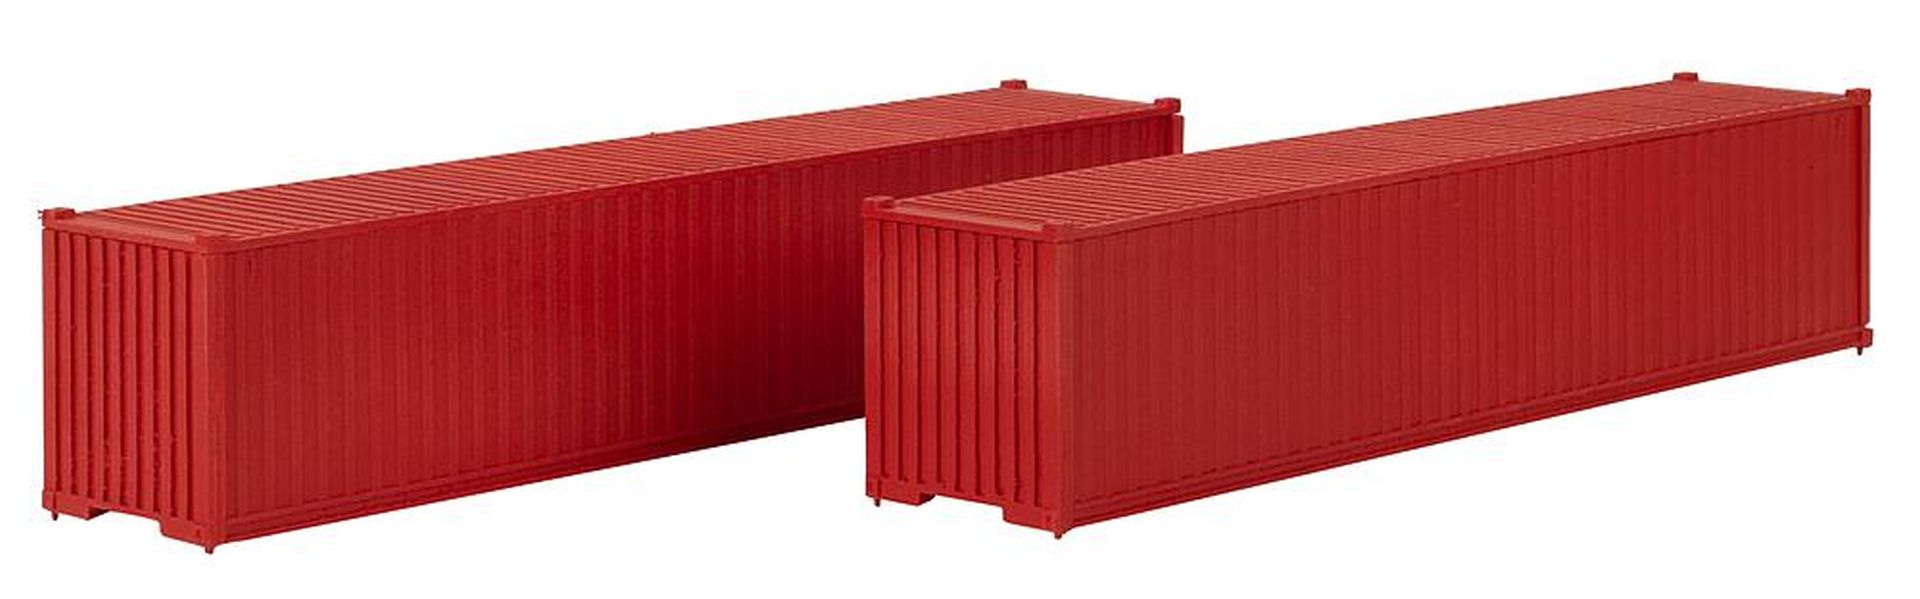 Faller 182154 - 2er Set 40' Container, rot